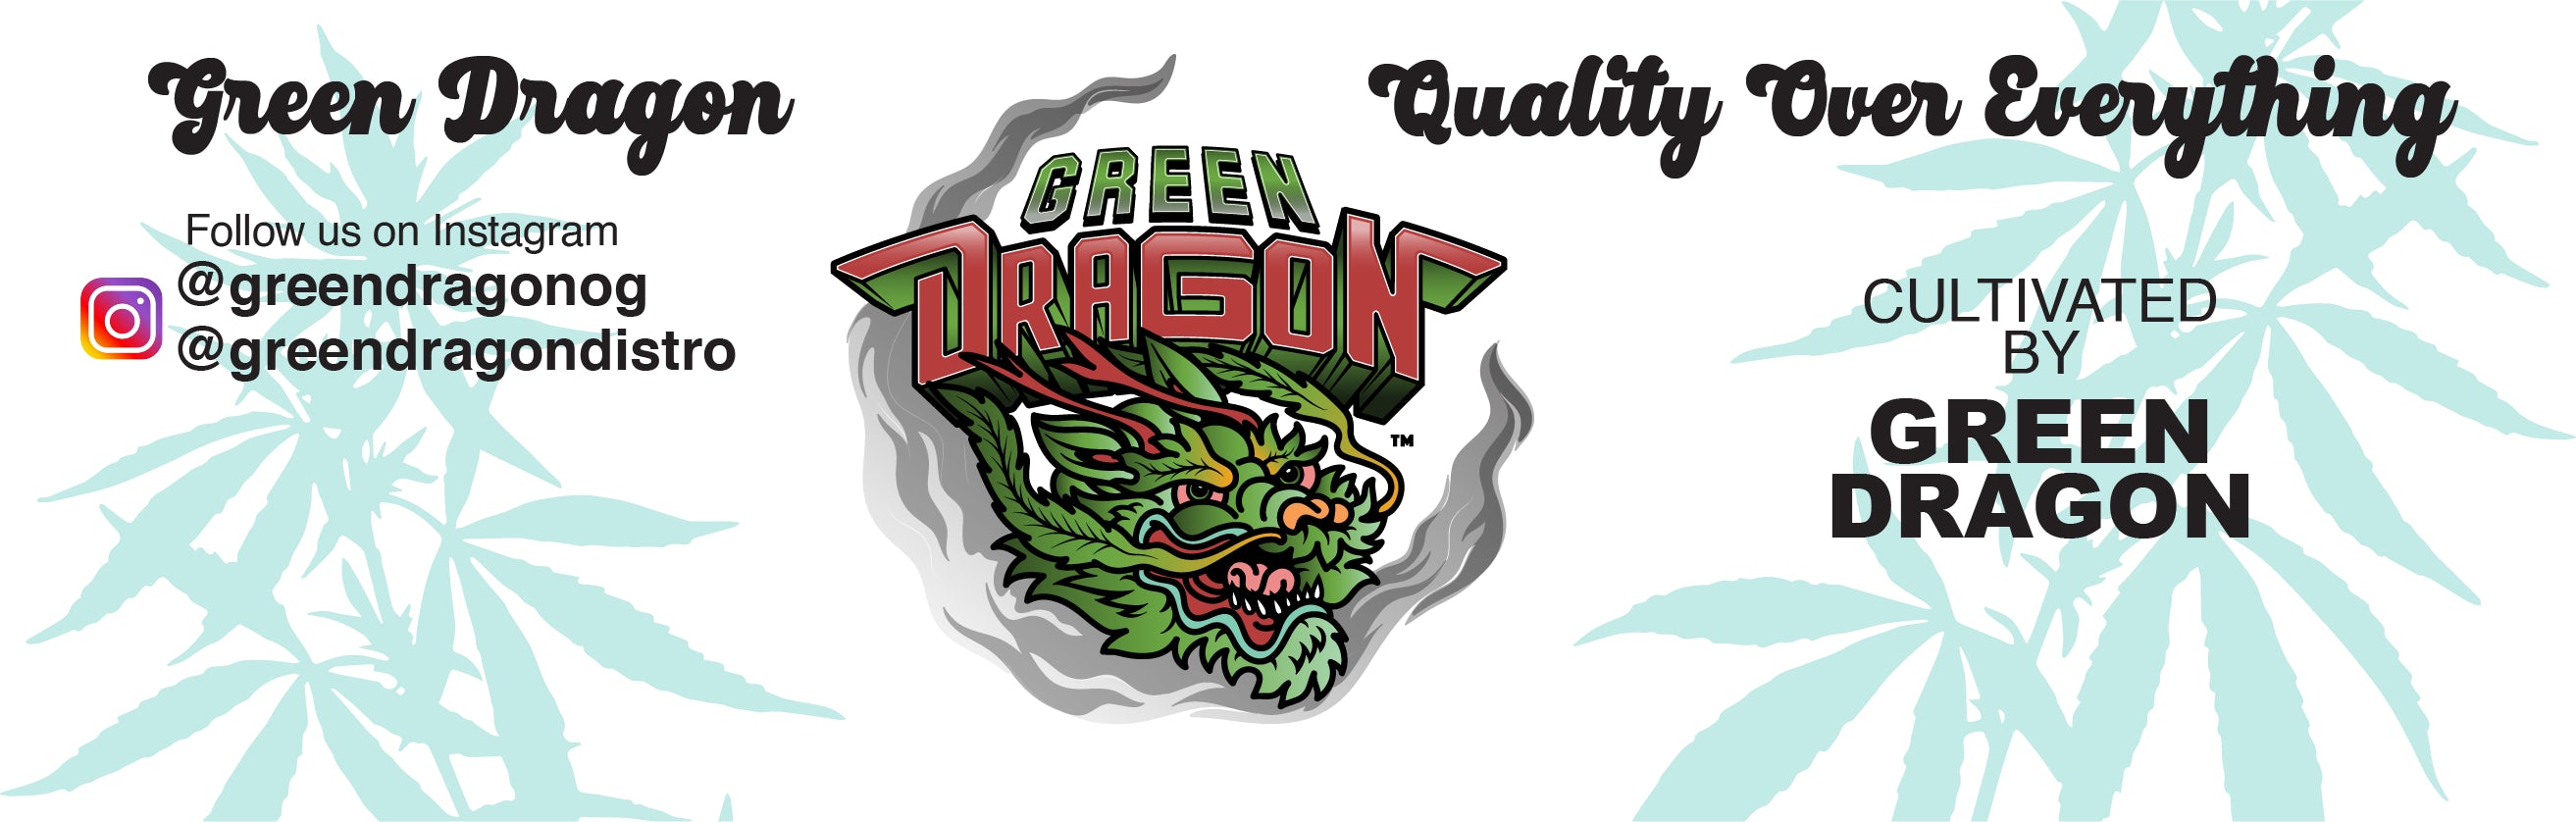 Green Dragon banner